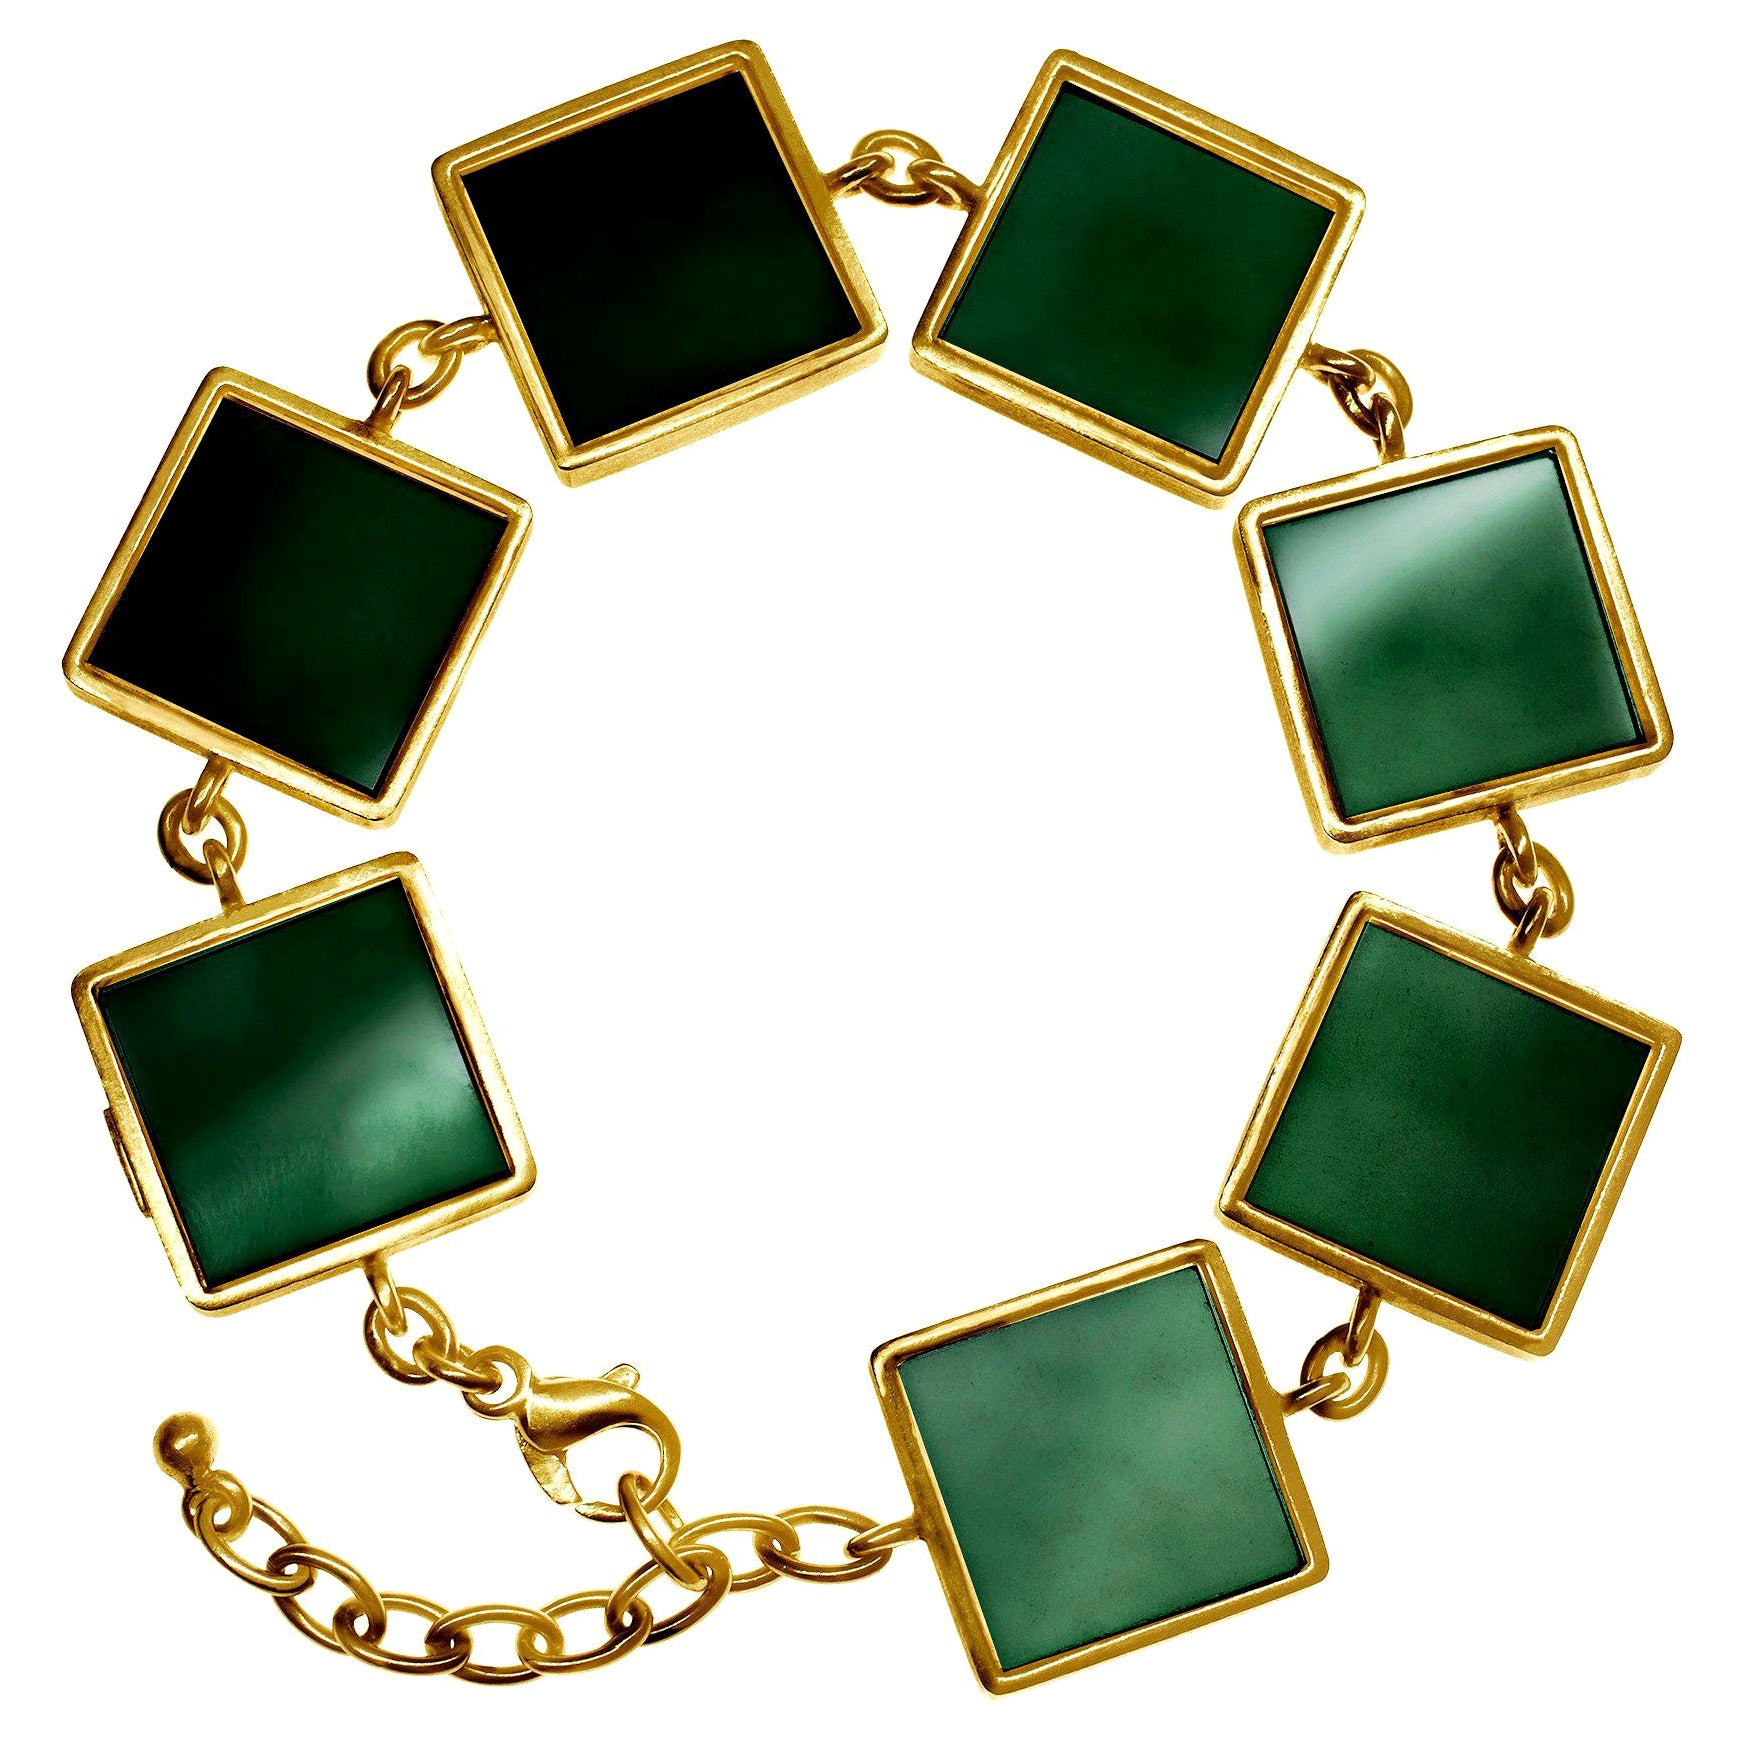 Featured in Vogue Yellow Gold Art Deco Style Bracelet with Dark Green Quartz